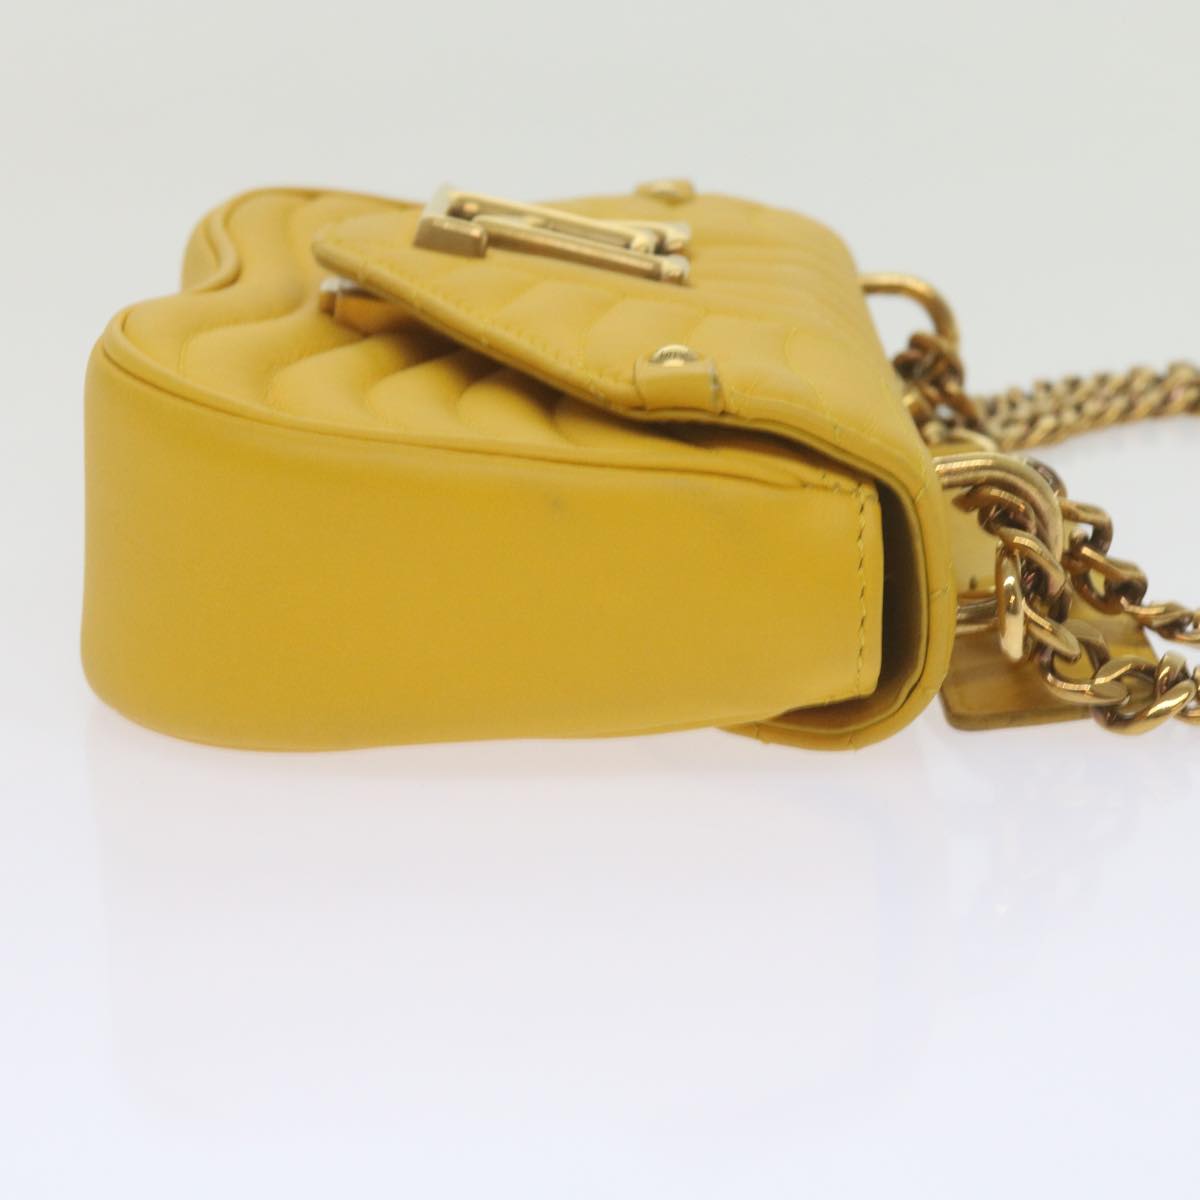 LOUIS VUITTON New Wave Chain Bag PM Shoulder Bag Leather Yellow LV Auth 60852A